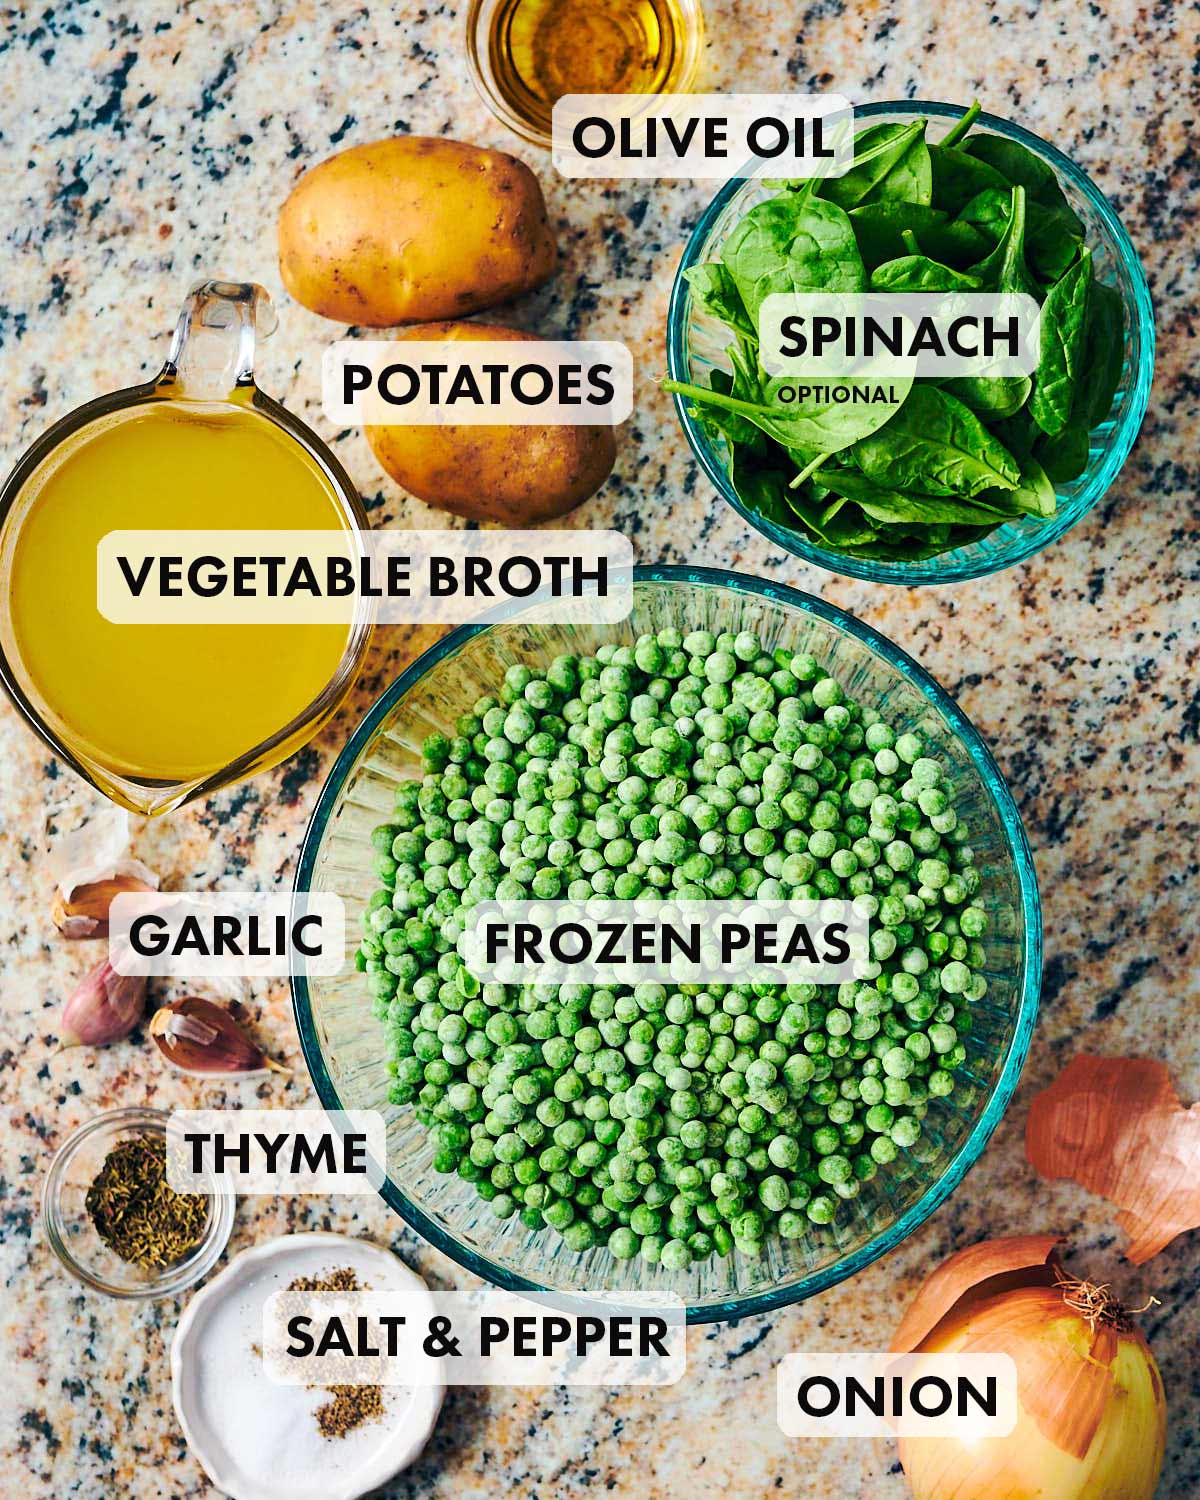 Ingredients to make vegan pea soup from frozen peas.